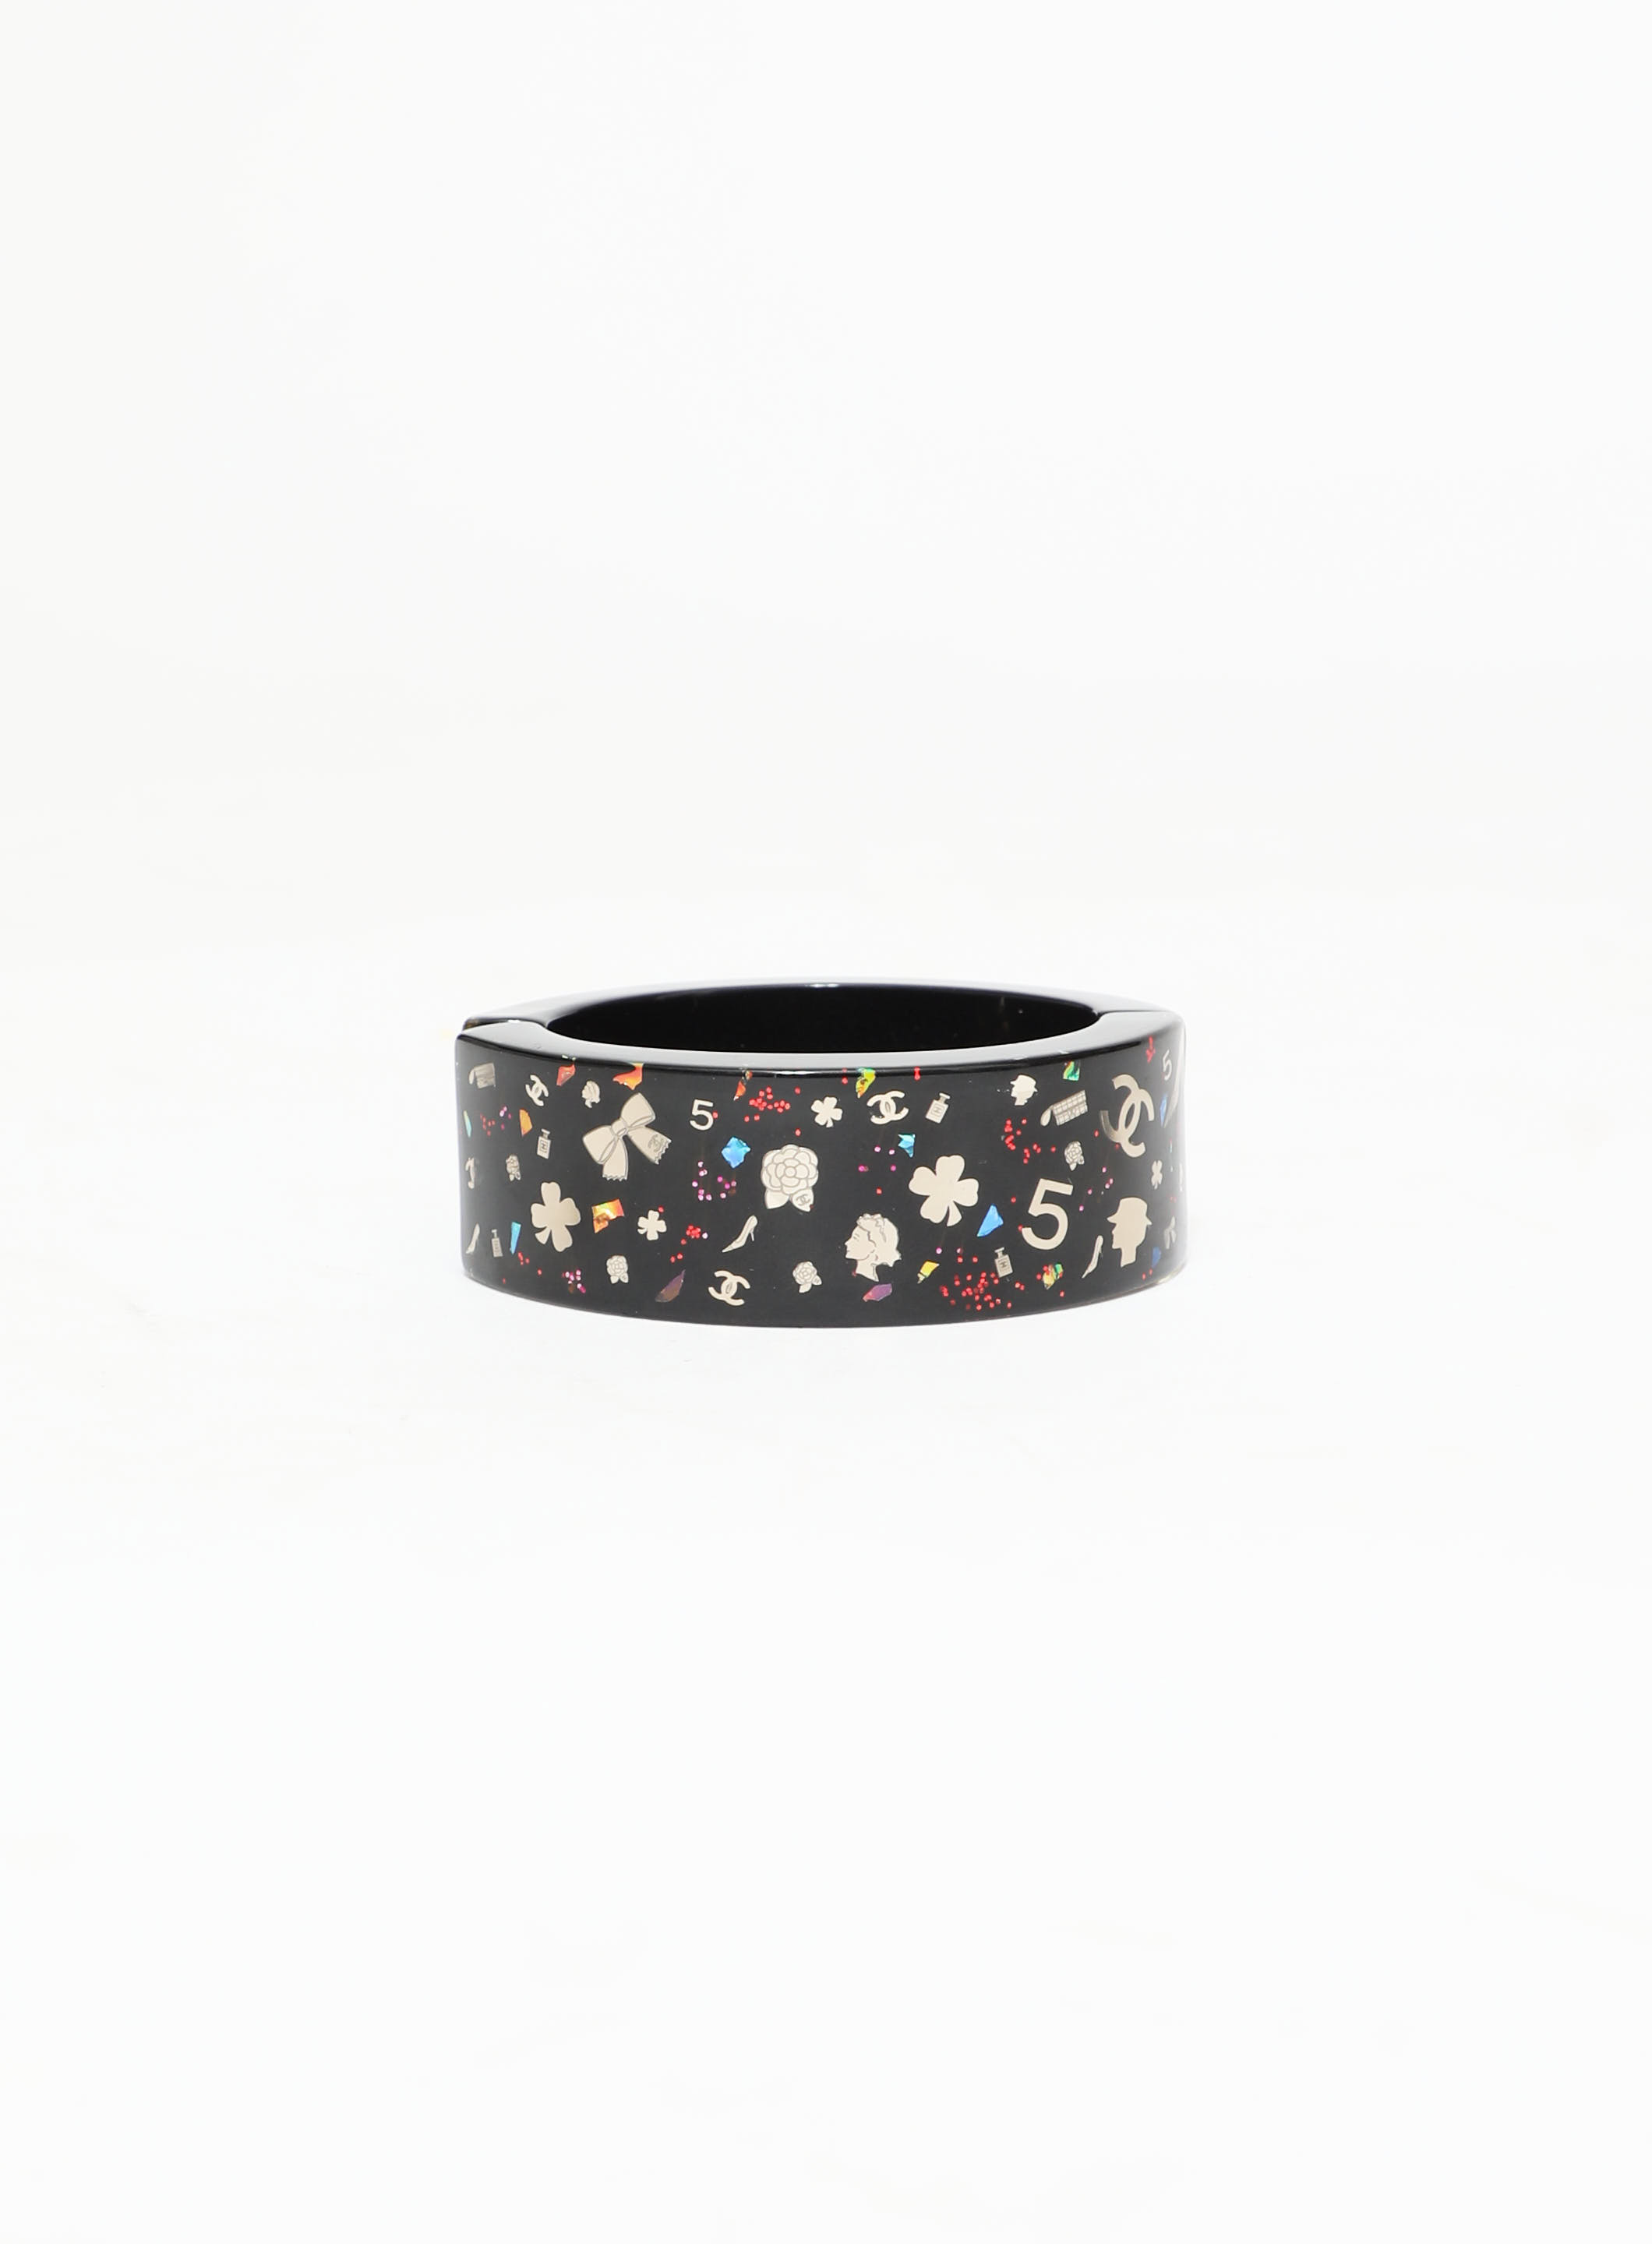 Chanel Resin CC Cuff Bracelet - Black, Palladium-Plated Cuff